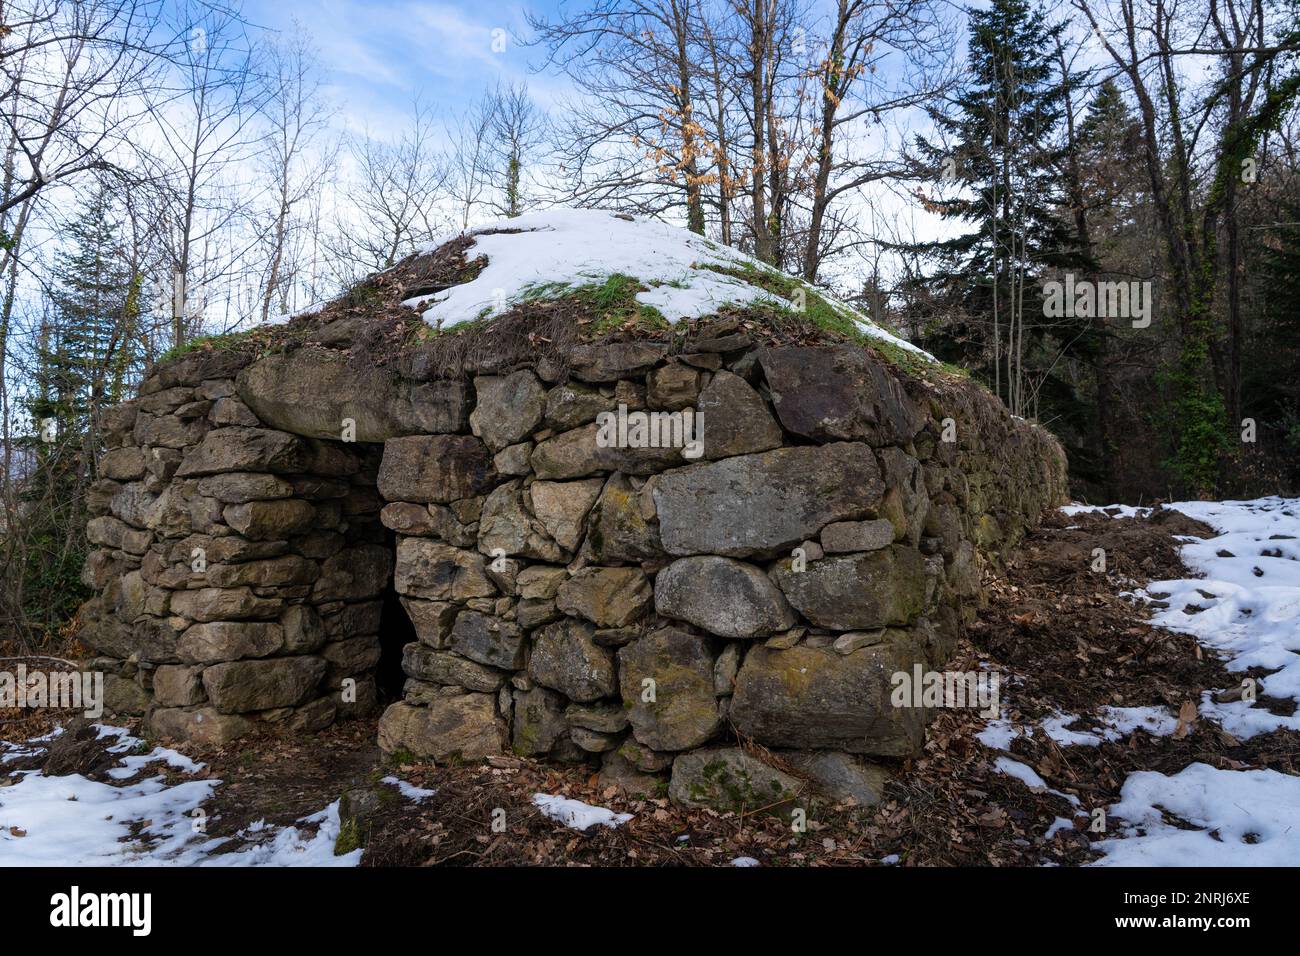 Clot del Baladre, cortals de pierre, corballed stone animal shelter, near Taurinya, Prades, Pyrenees Orientales, France. Stock Photo